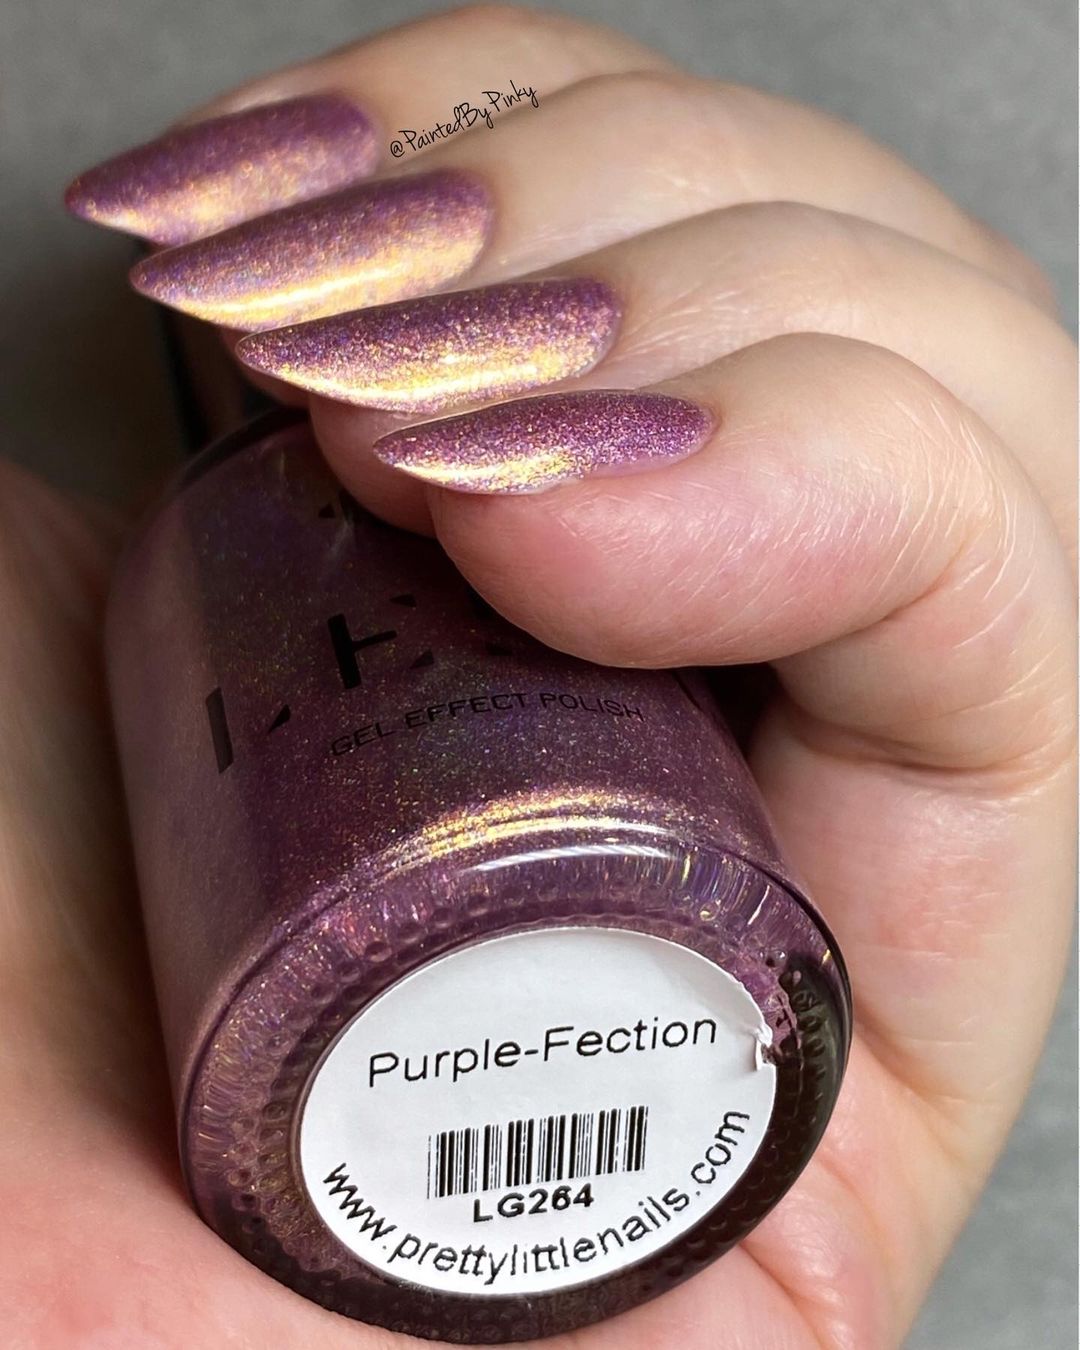 Purple-Fection - LENA Air Dry Gel Nail Polish 14ml - LG264